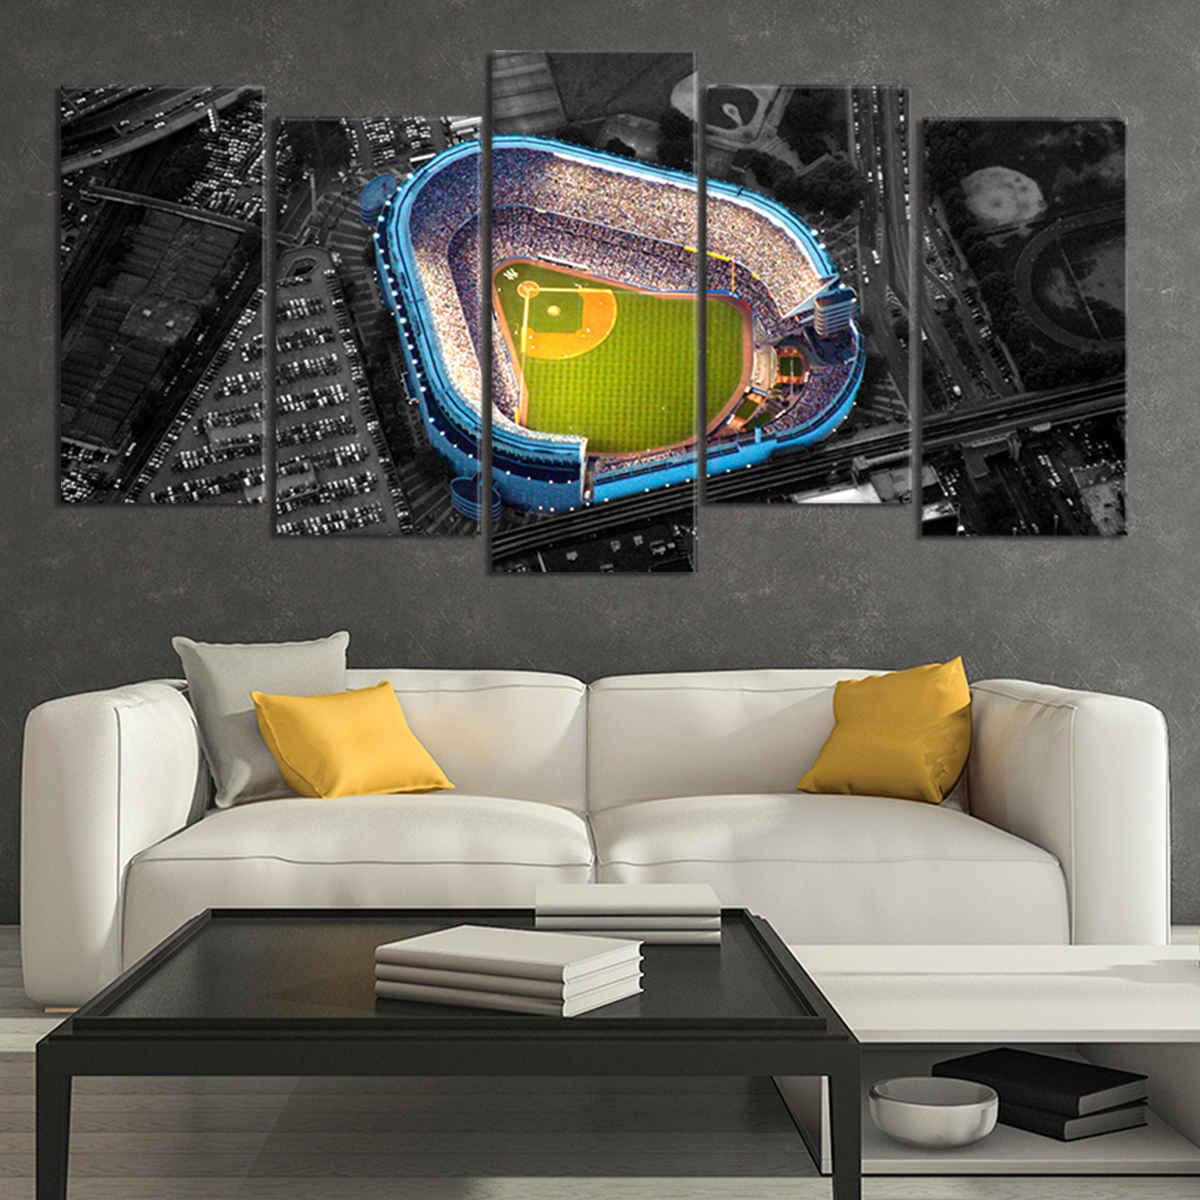 MLB 3D Stadium Wall Art - New York Yankees